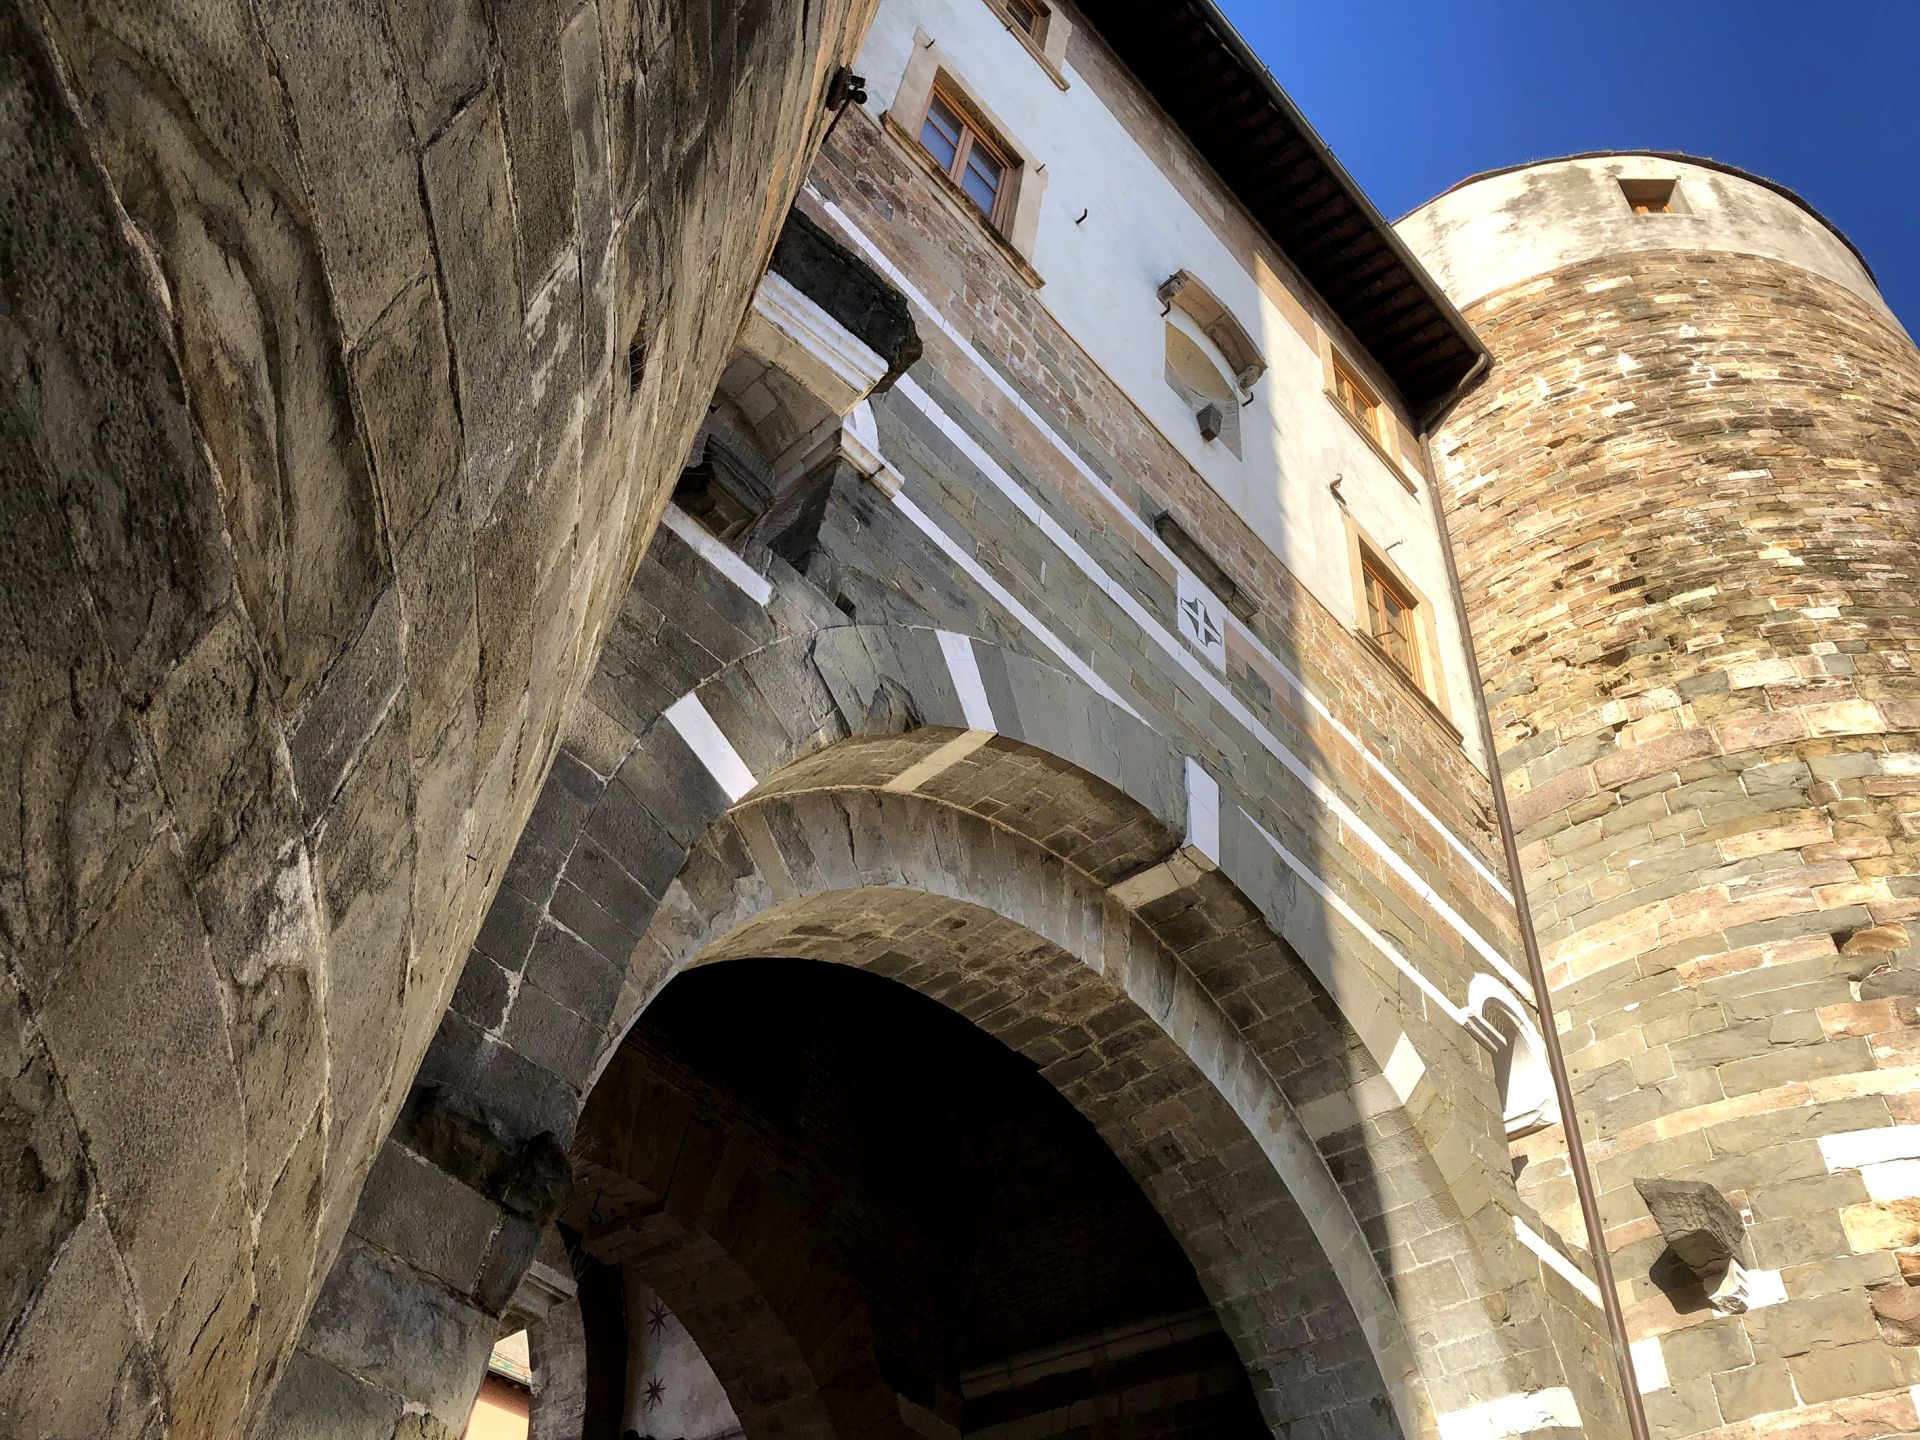 Porta San Gervasio and the medieval walls